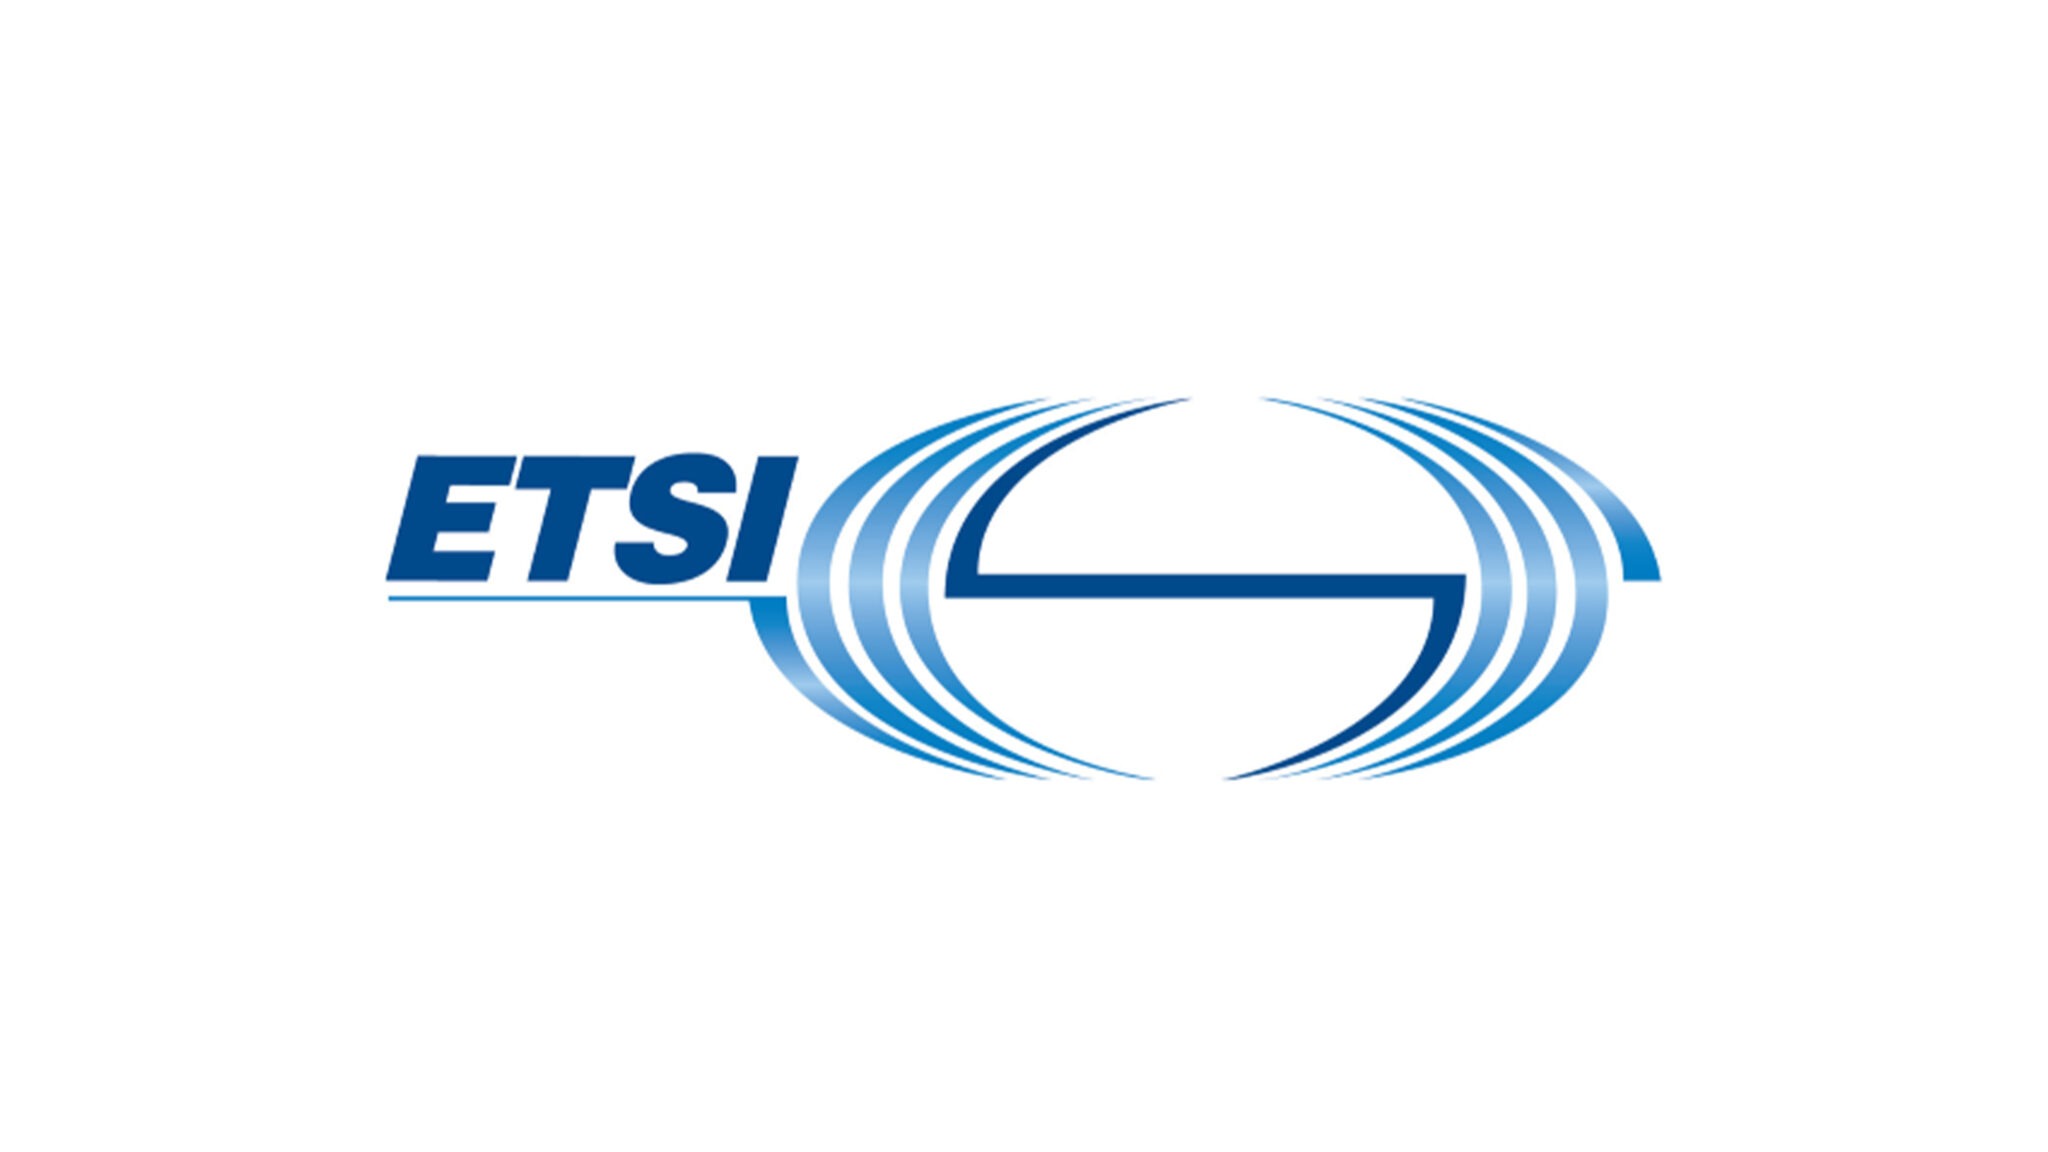 ETSI_logo